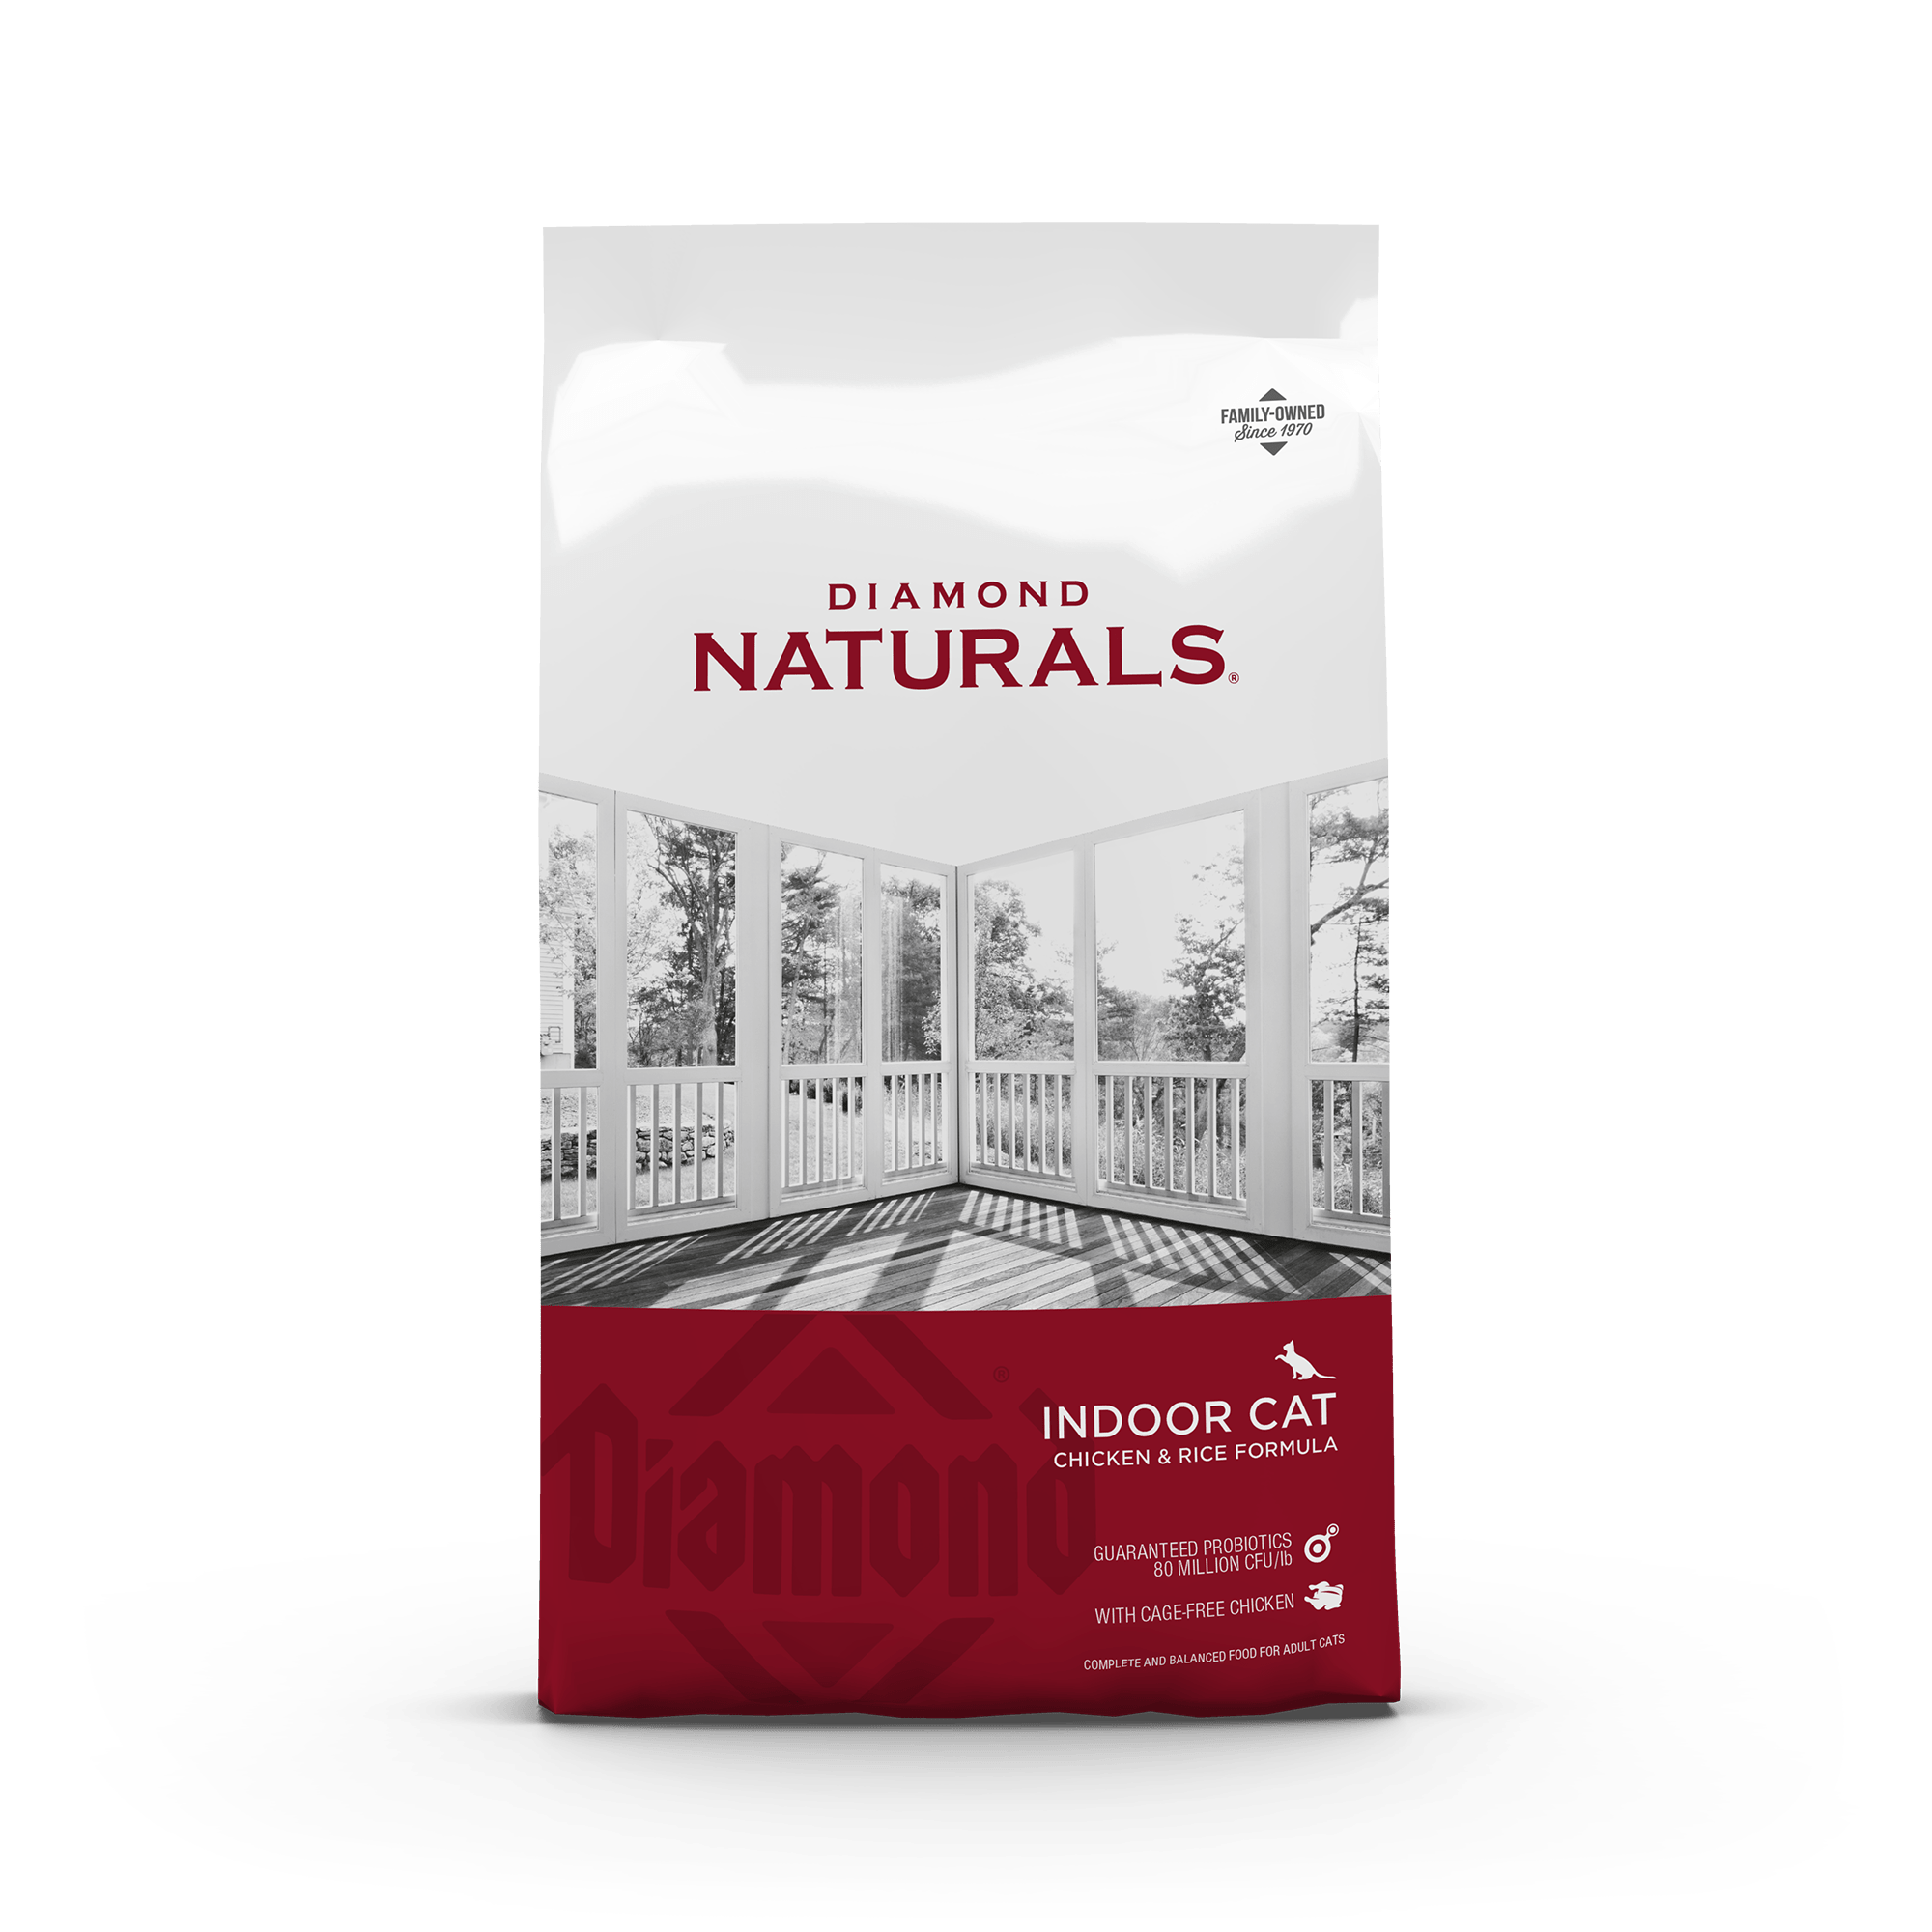 Diamond Naturals Indoor Cat Chicken & Rice Formula product packaging